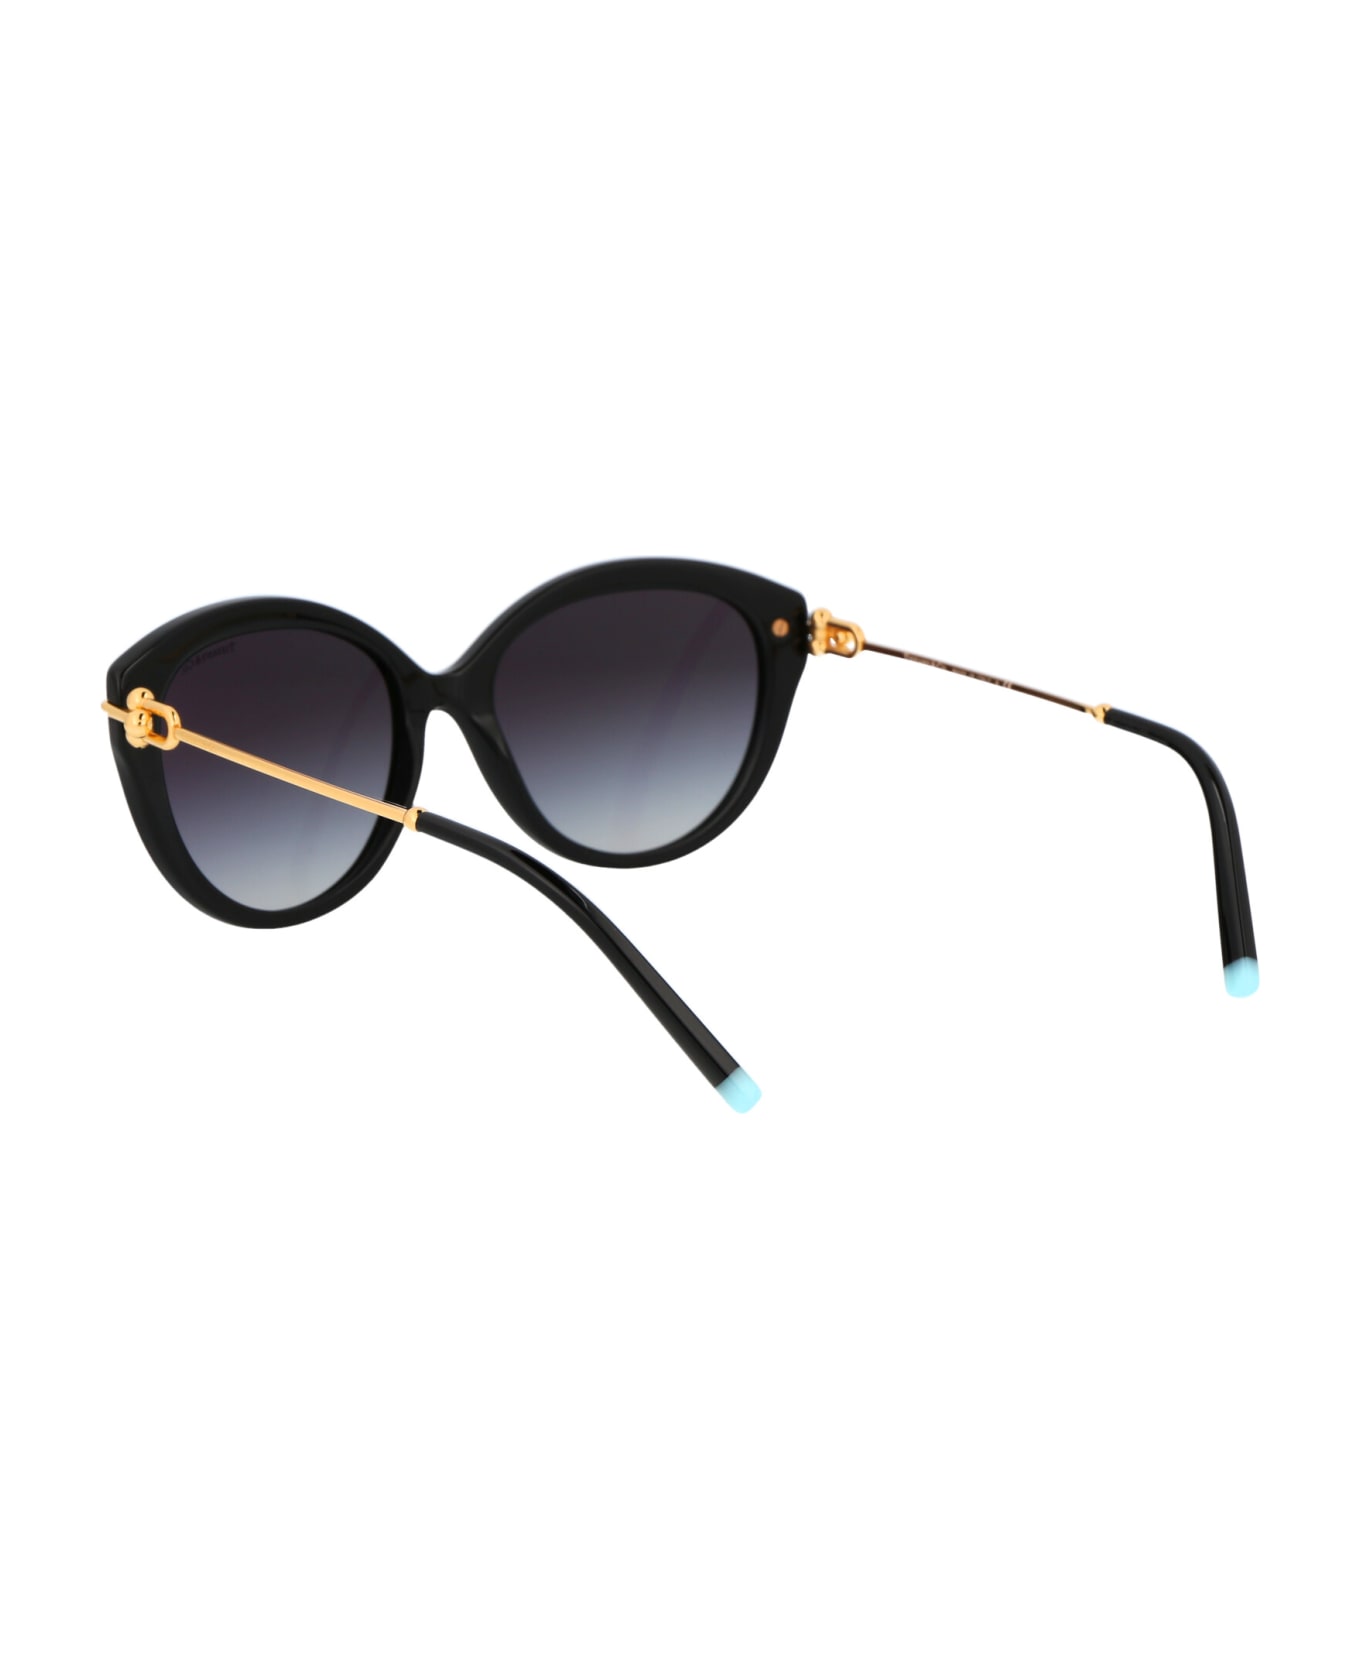 Tiffany & Co. 0tf4187 Sunglasses Classic - 80013C Black